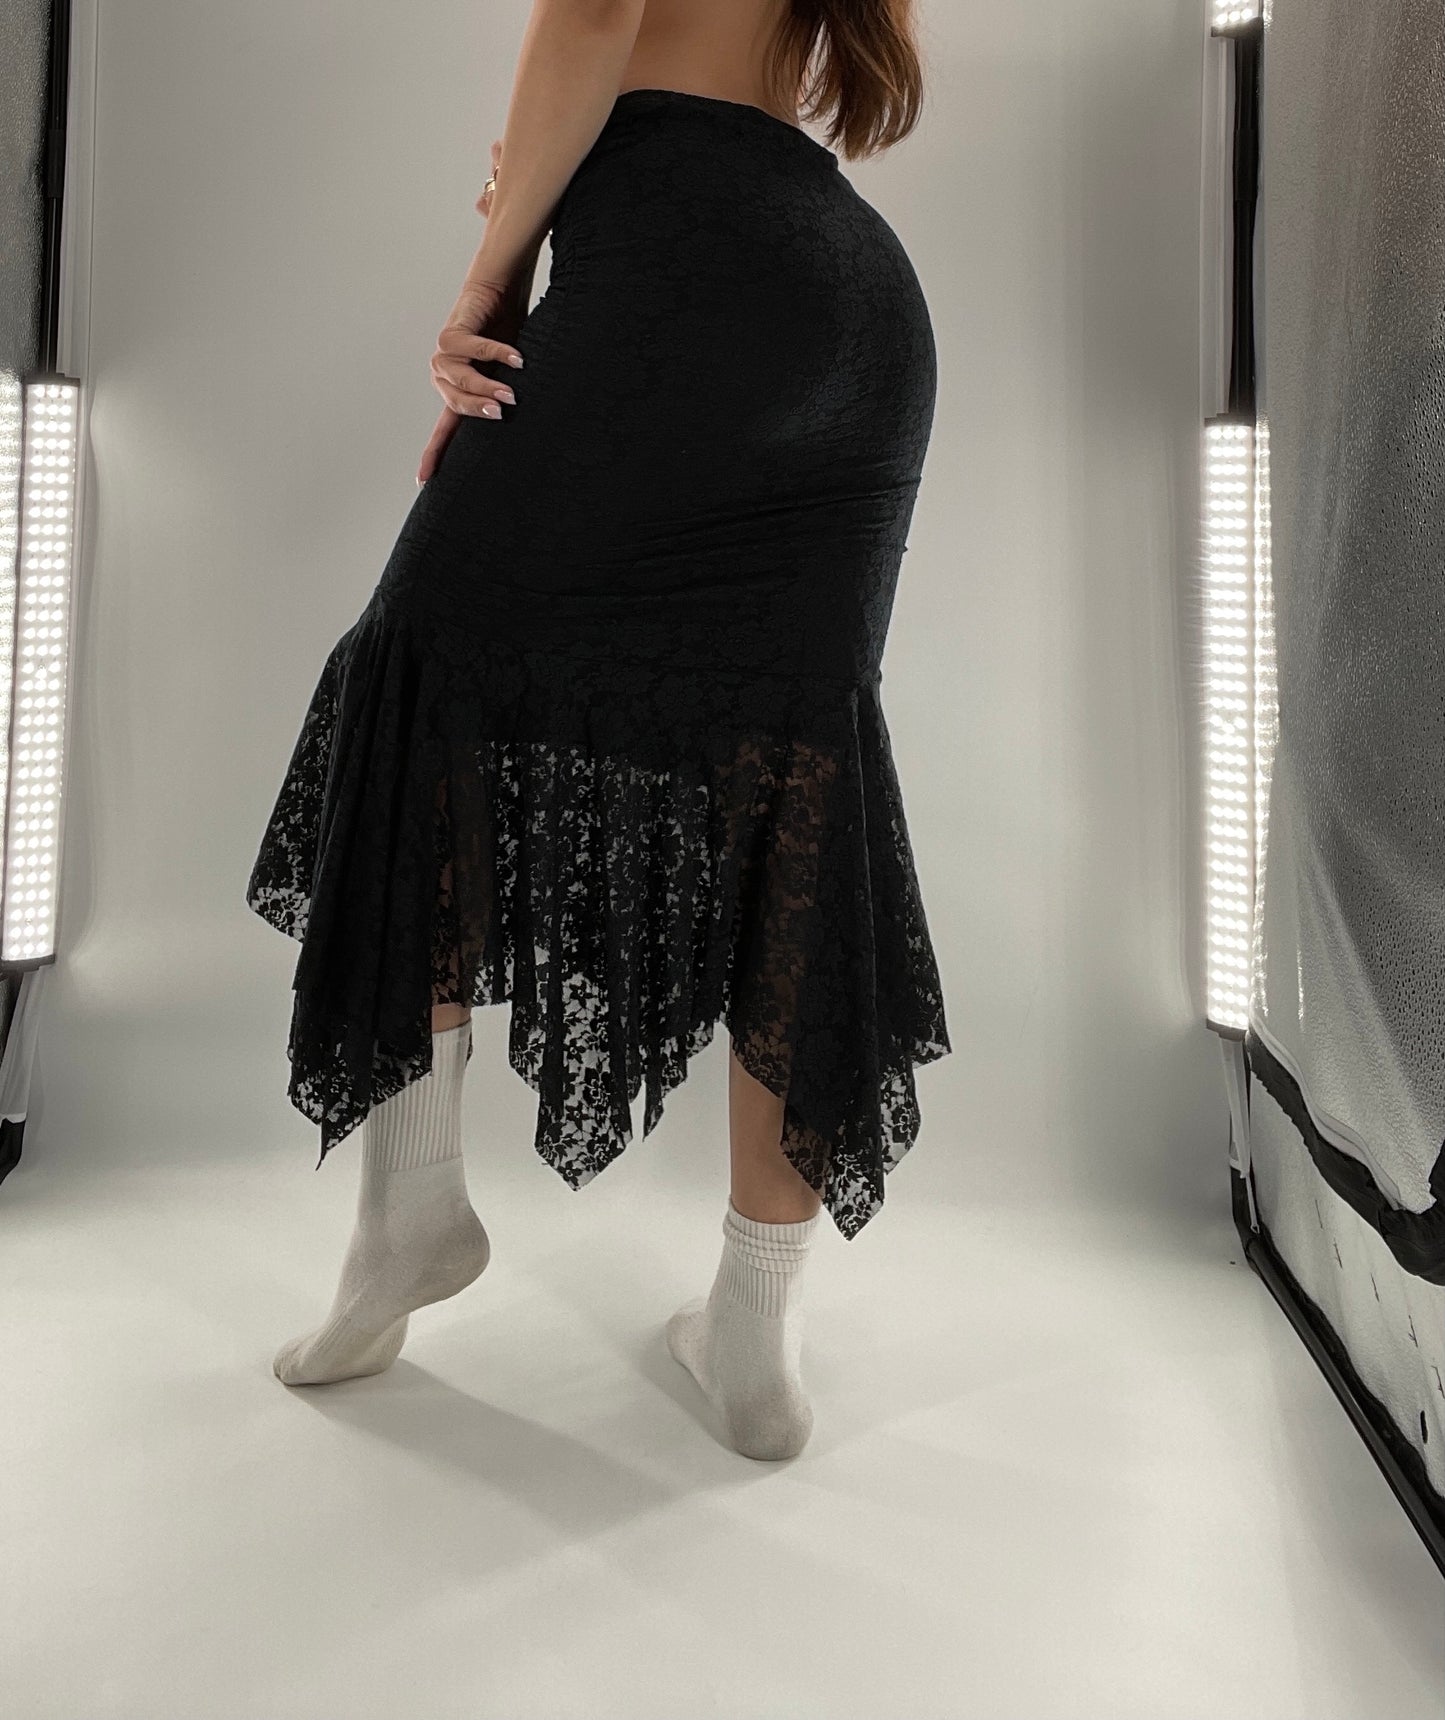 Vintage KOJIYOHJI Black Lace Dress/Skirt w Hankerchief Hem (Medium)